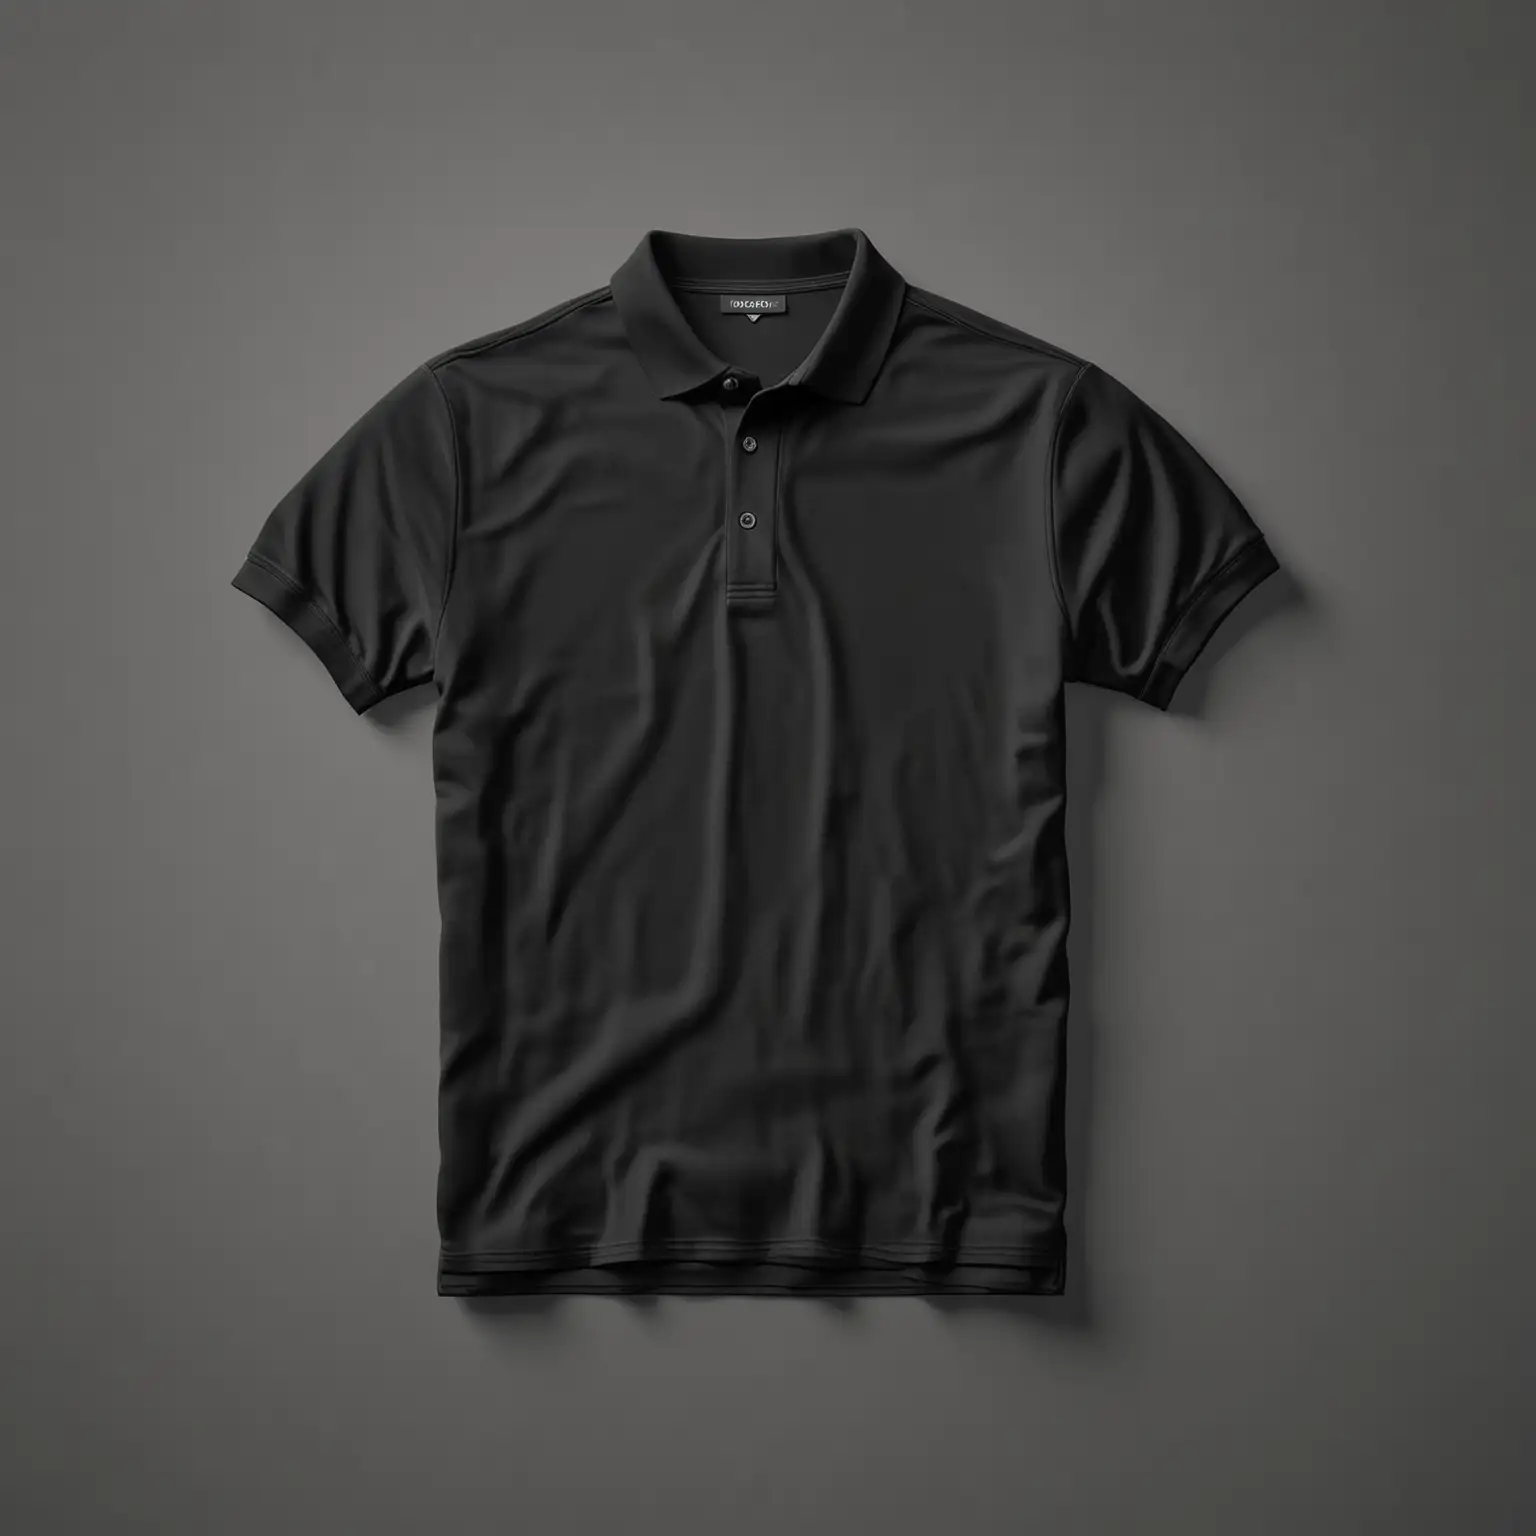 Plain Black Polo Shirt 3D Mockup on White Background for Mens Apparel Display